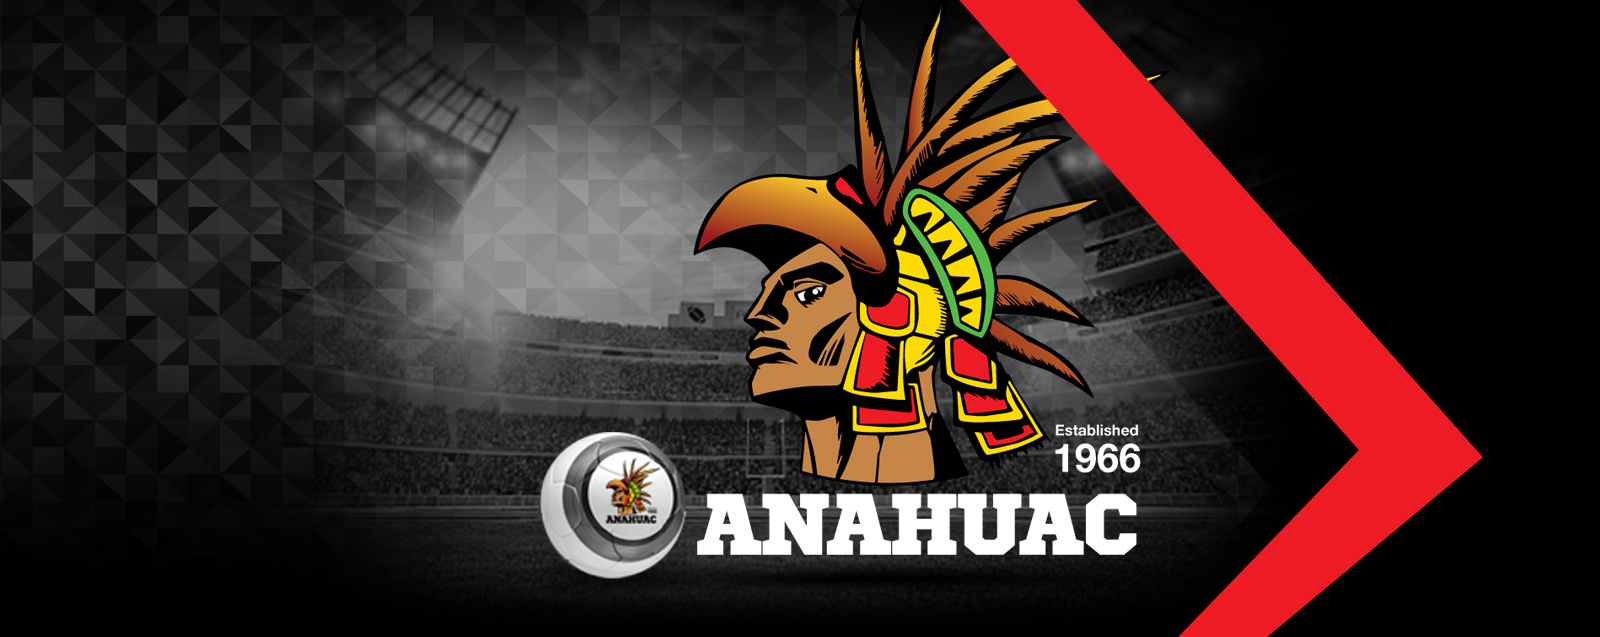 UPSL Soccer News: FC Anahuac Edges Inter Arizona in UPSL Championship Final